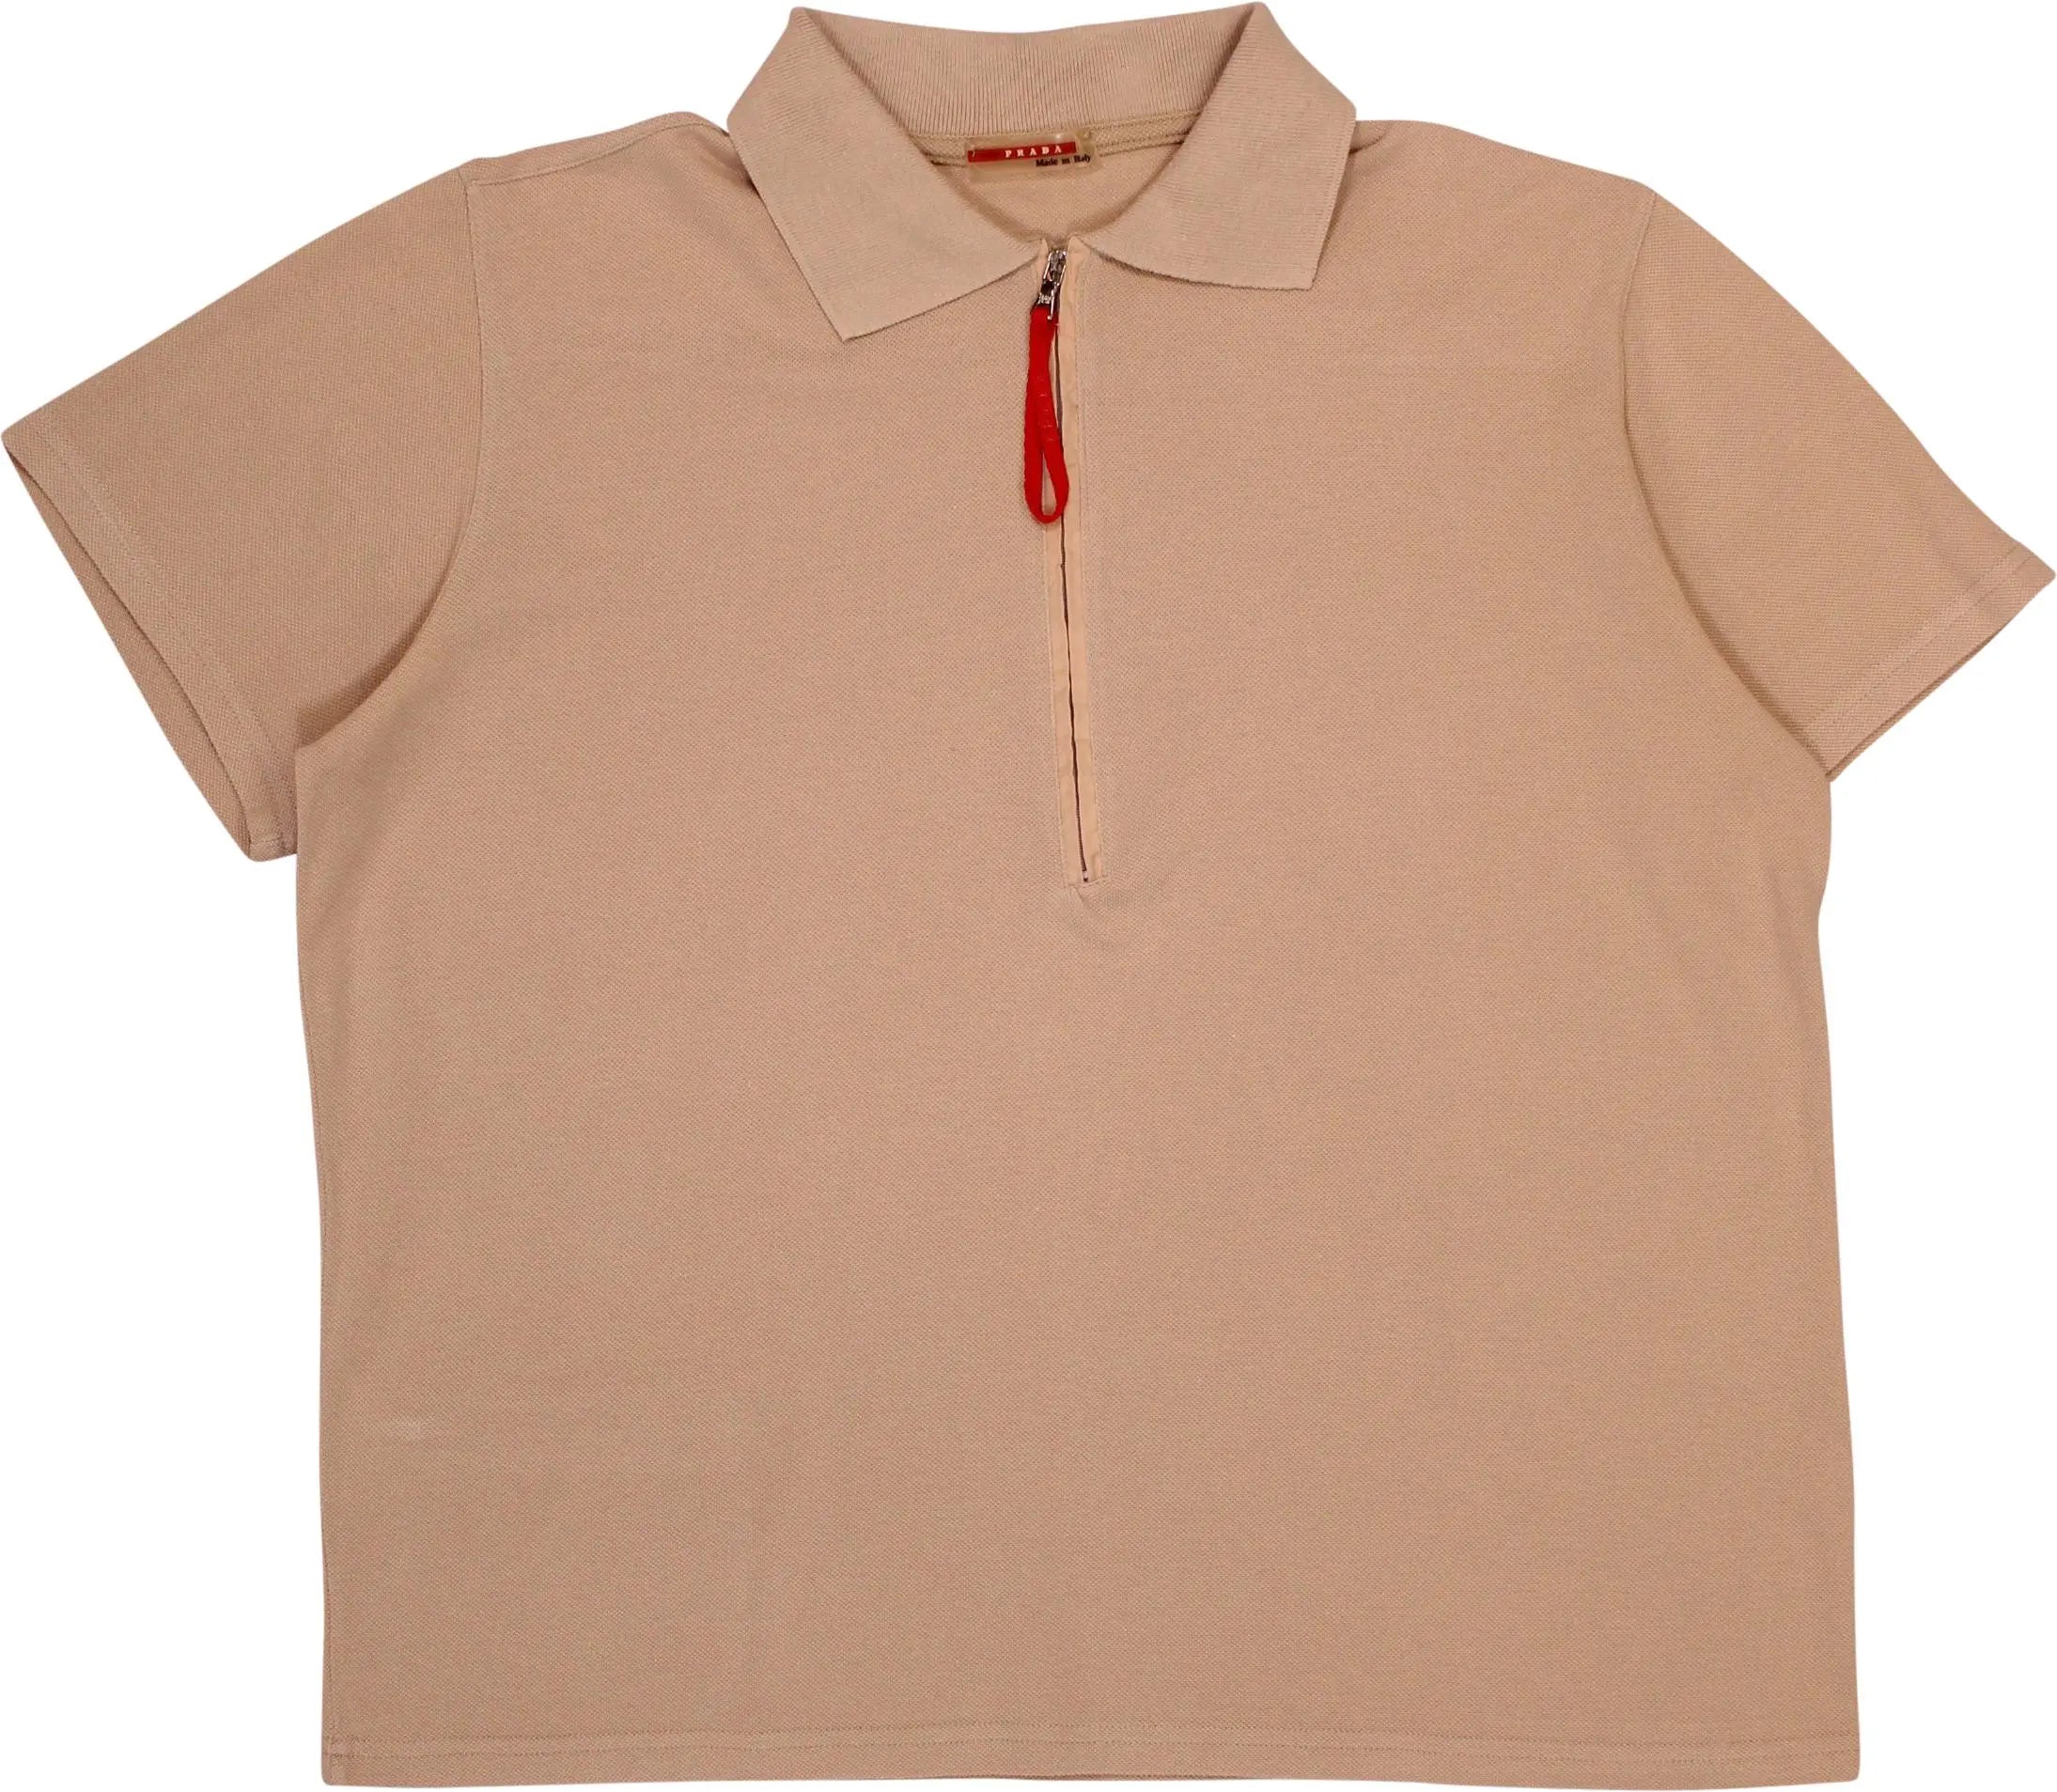 Vintage Prada Sport Polo Quarter Zip Up Top Shirt Jacket Brown